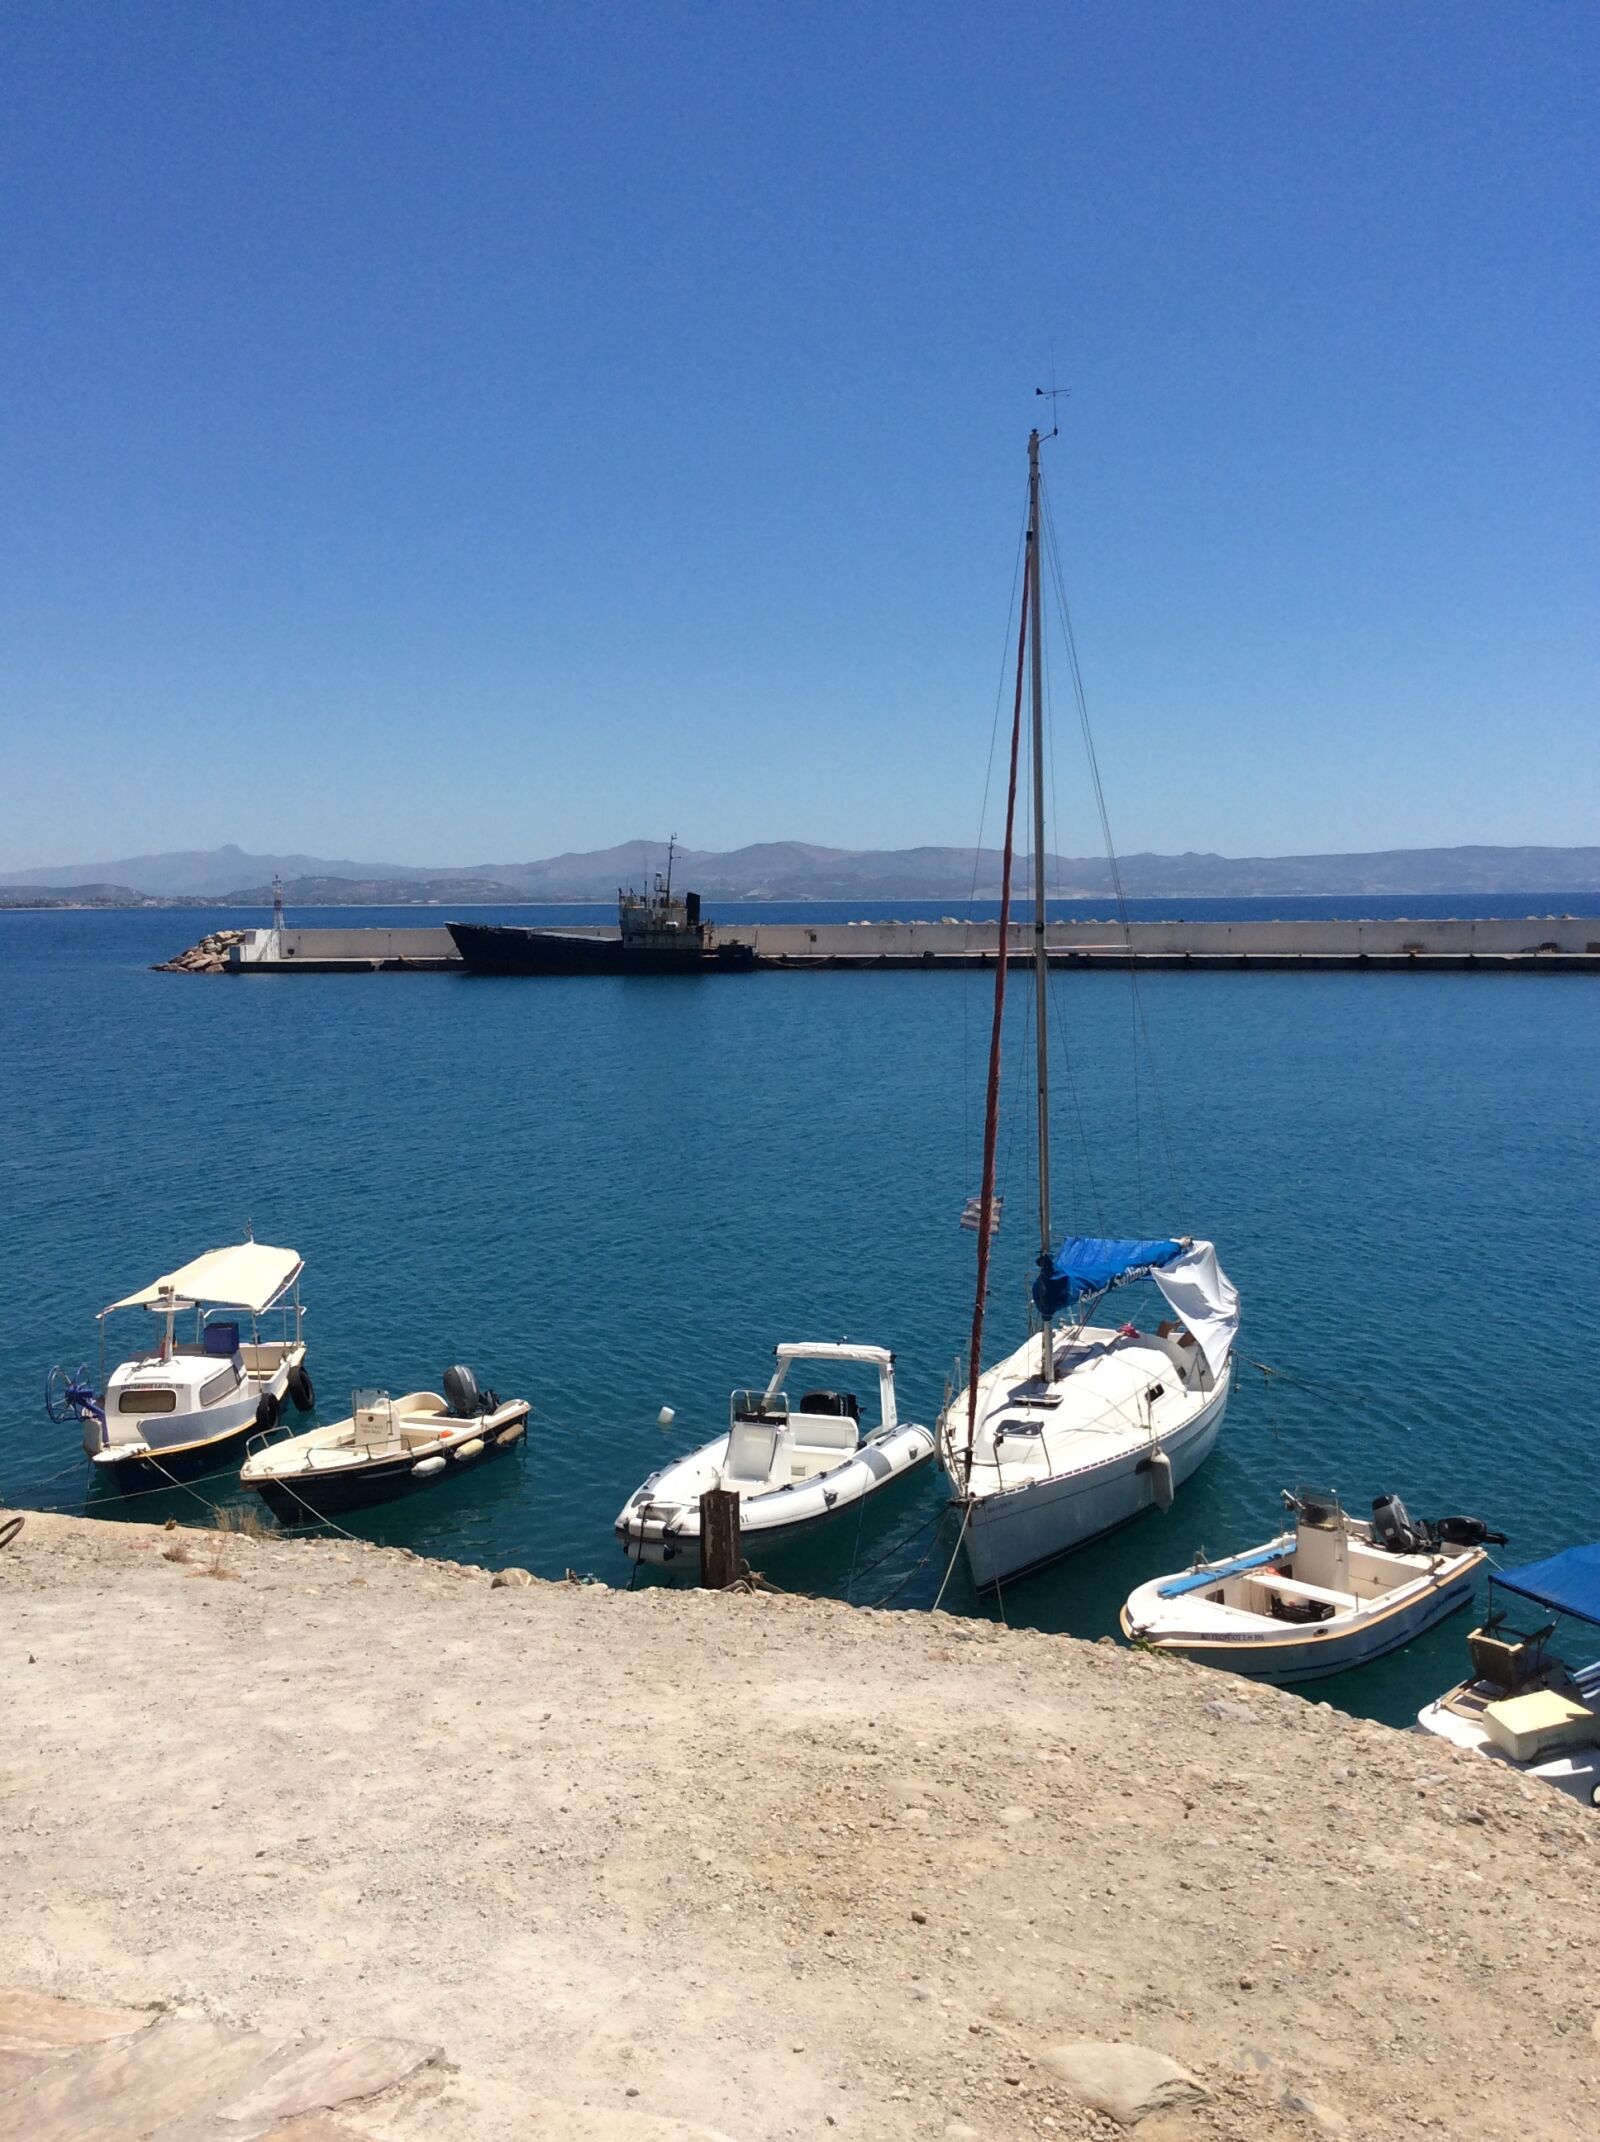 Apple iPad Air + iPad Air back camera 3.3mm f/2.4 sample photo. Boats, harbor, crete photography